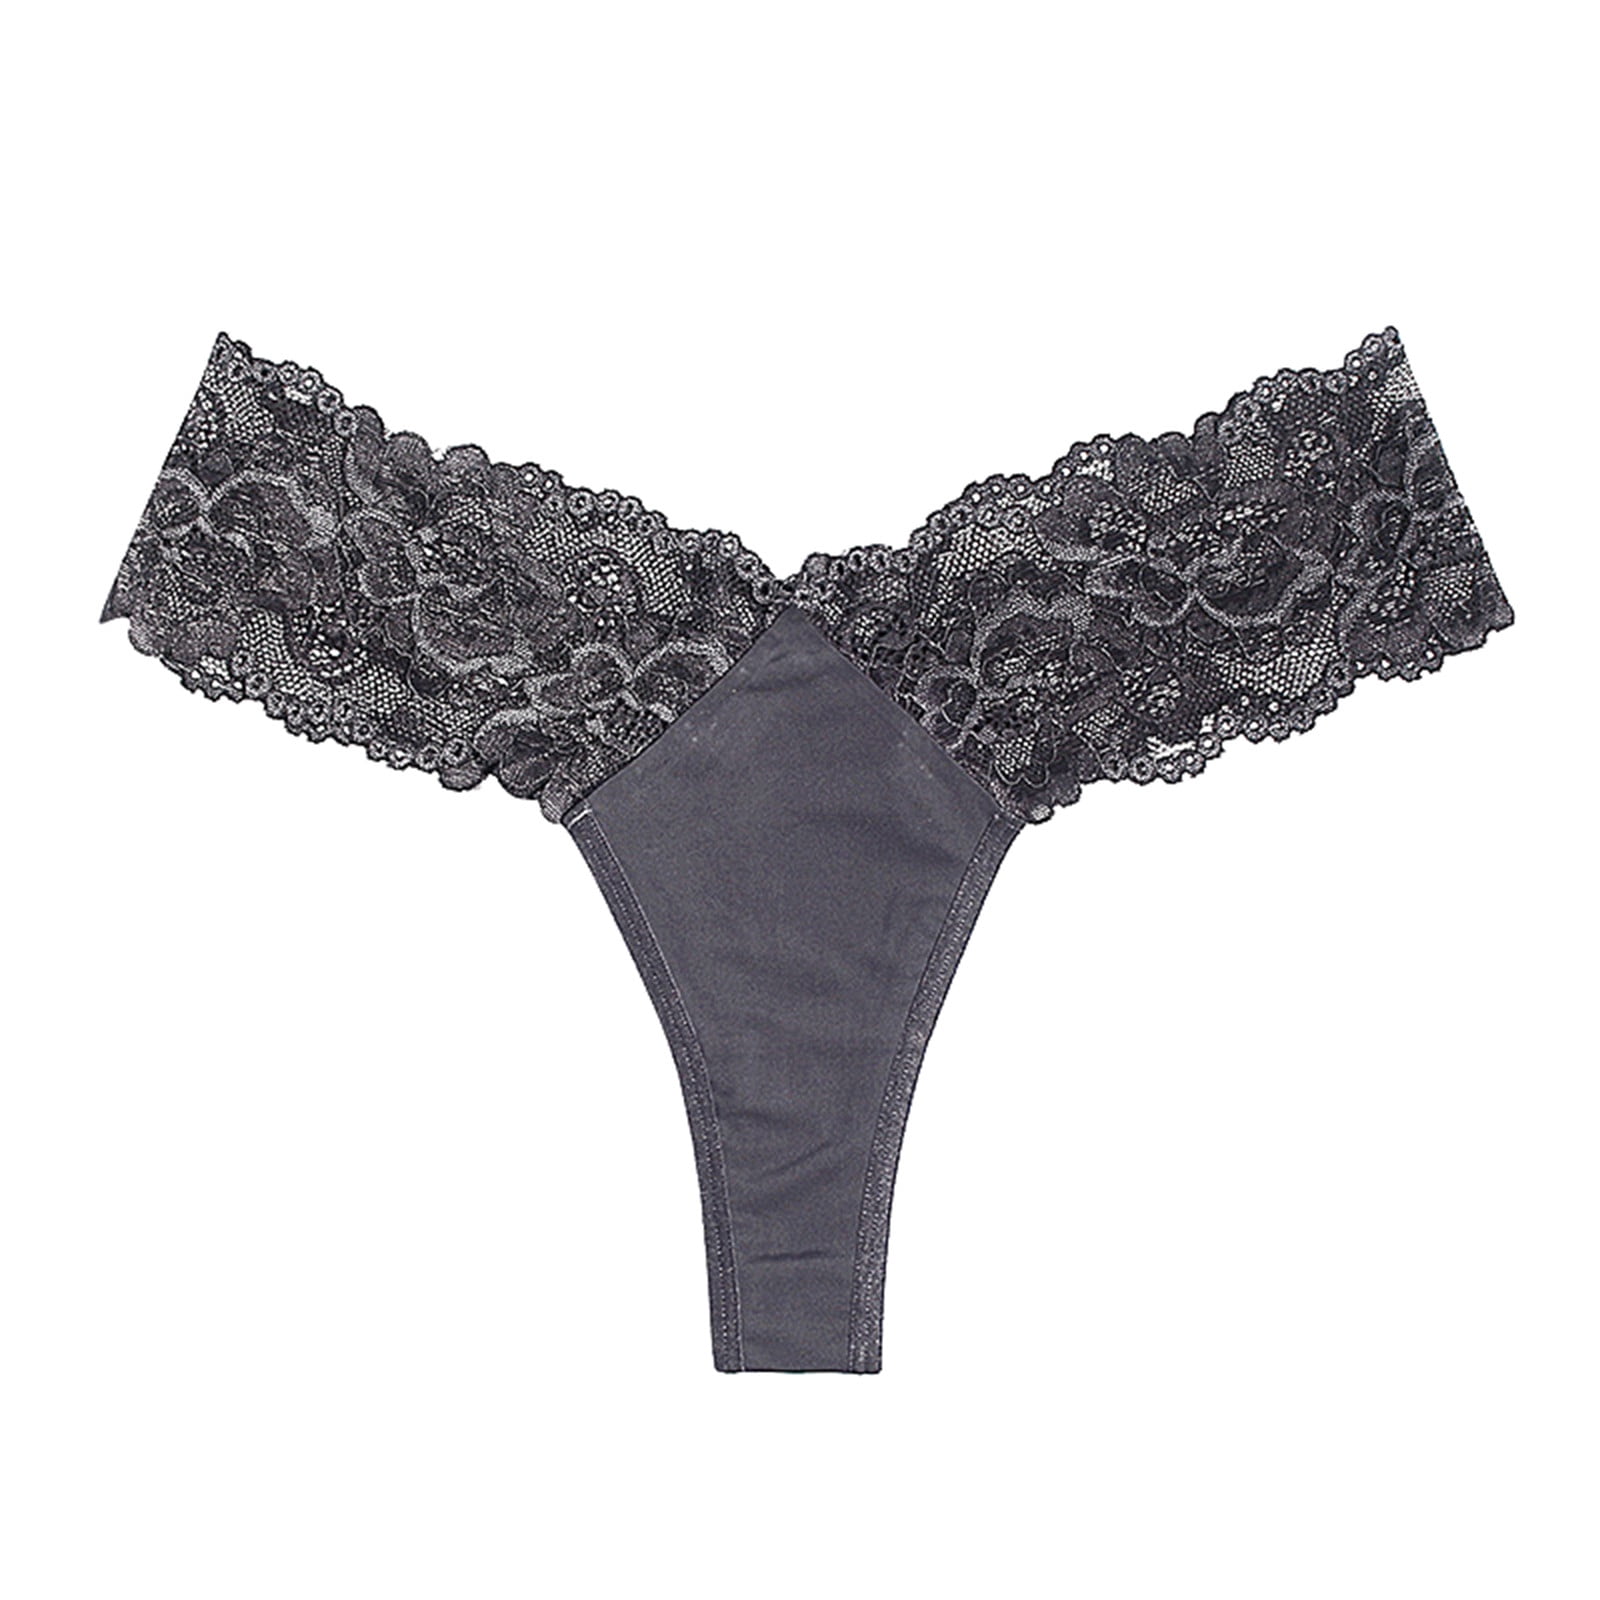 LBECLEY Cotton Women Underwear French Cut Lace Underwear